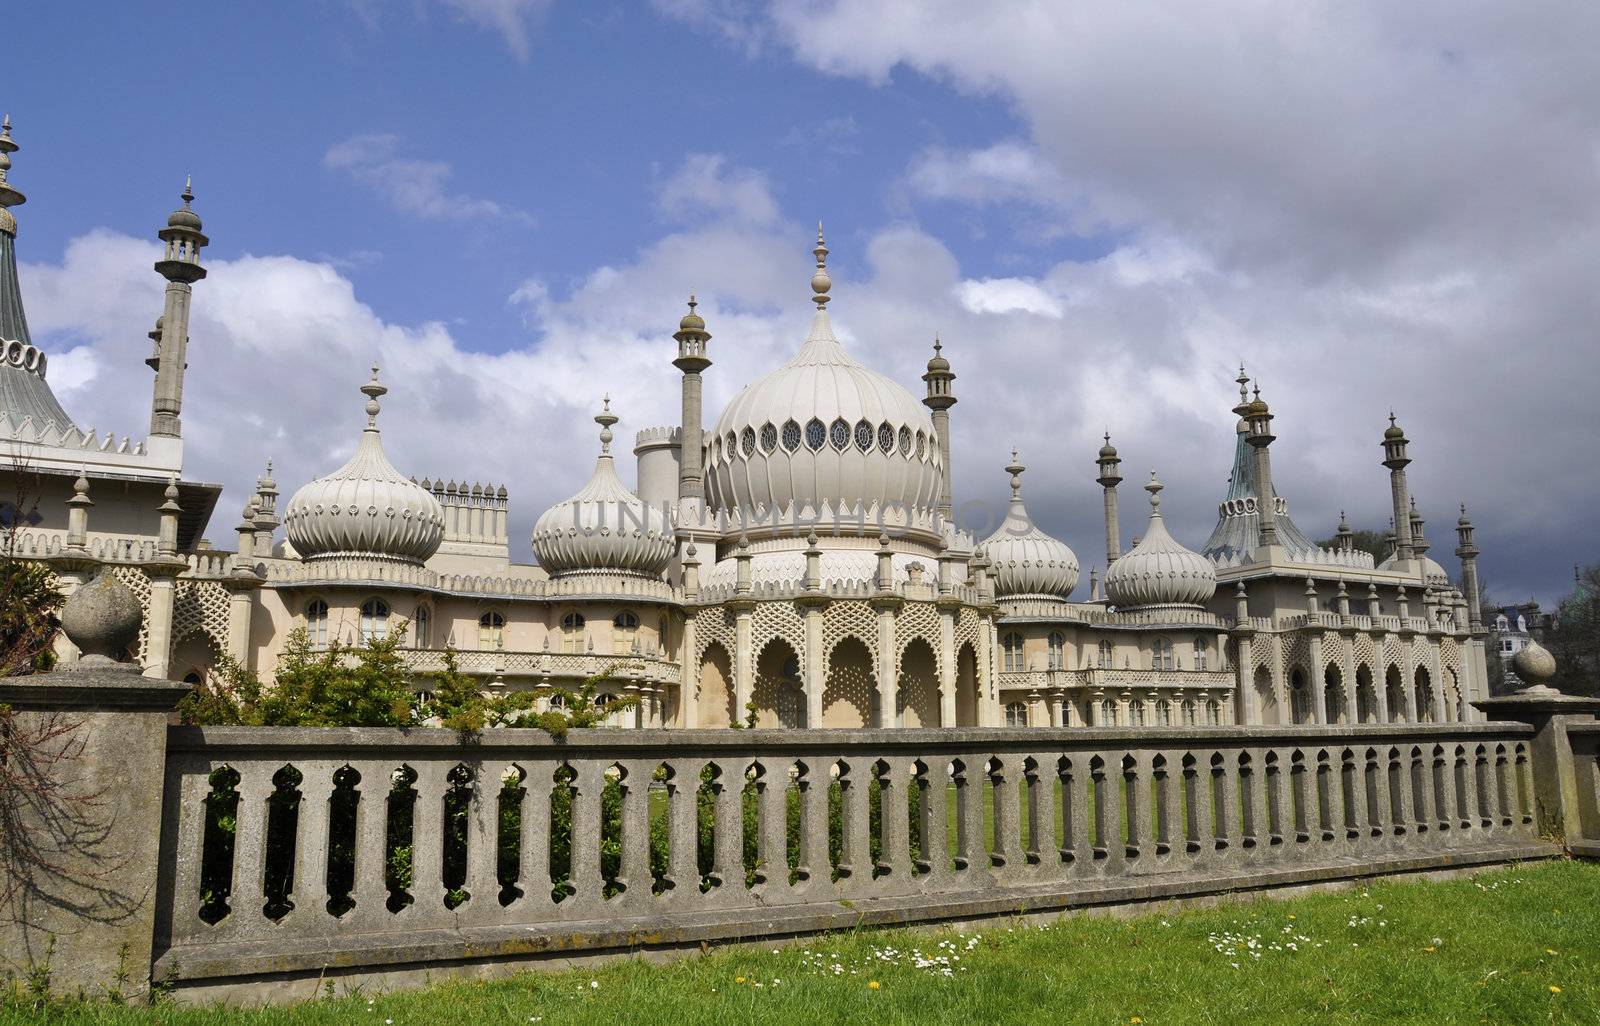 The Royal Pavilion in Brighton, England, UK